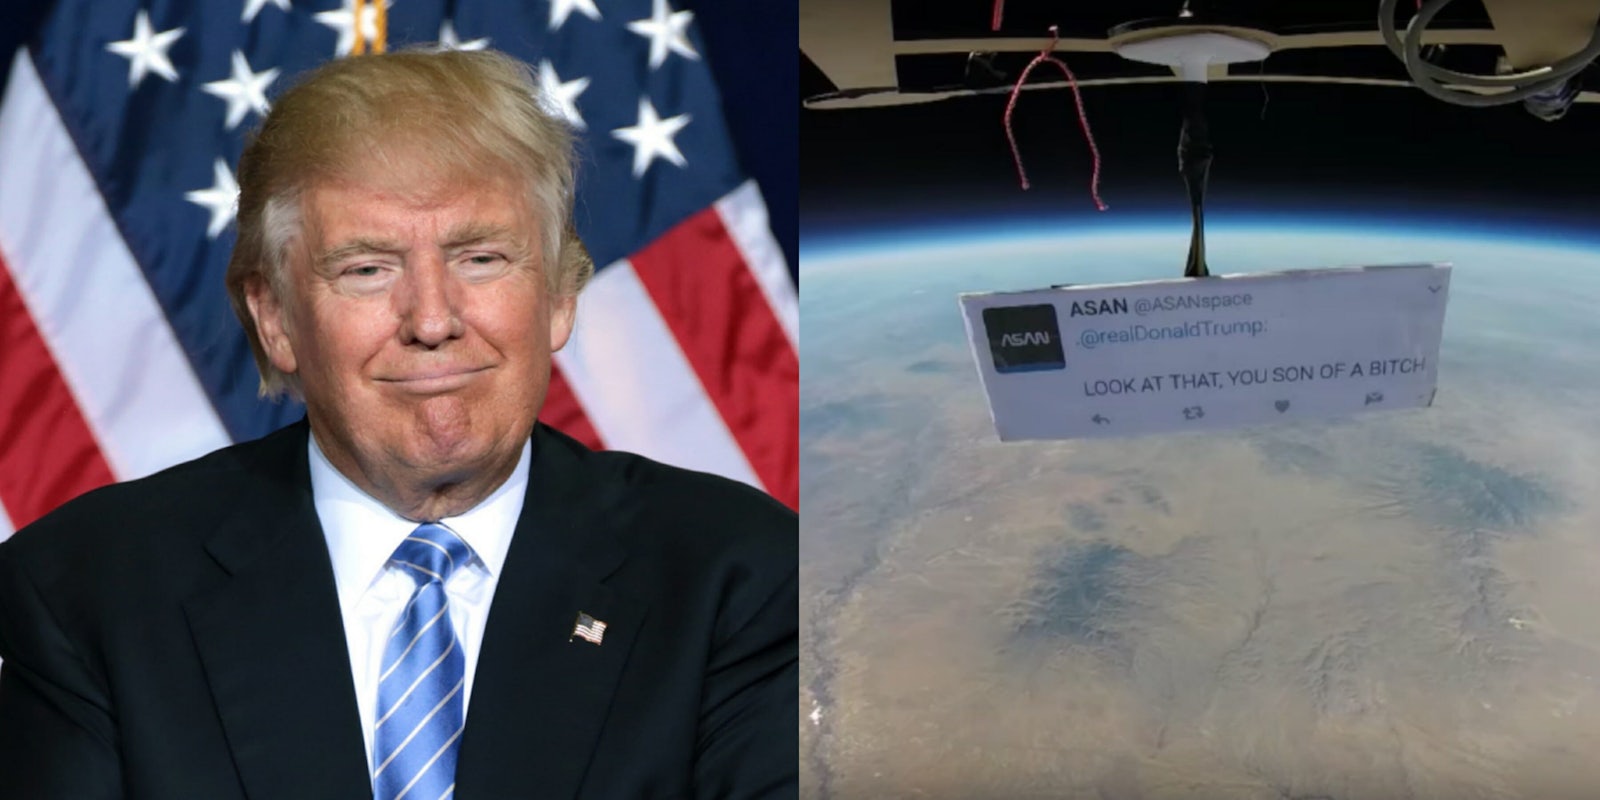 Trump ASAN Space Protest